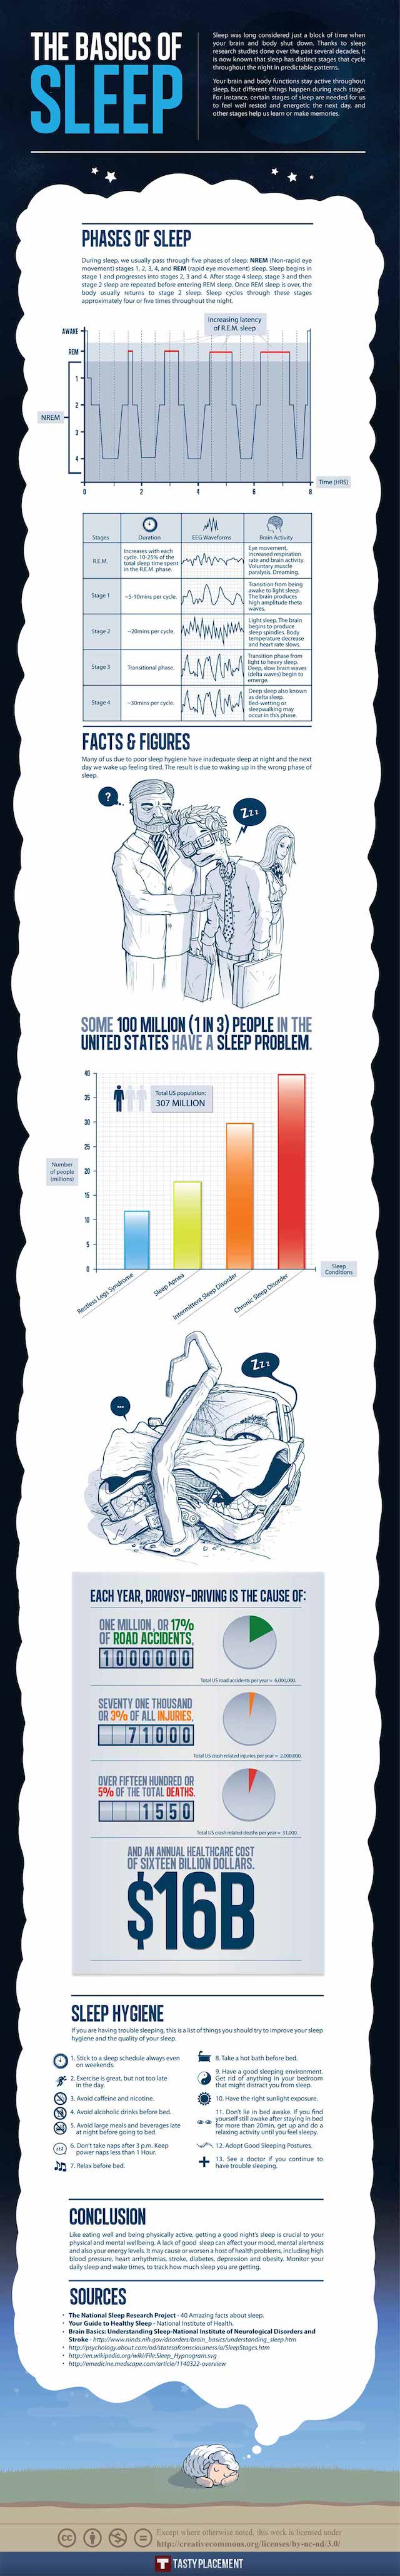 basics of sleep infographic